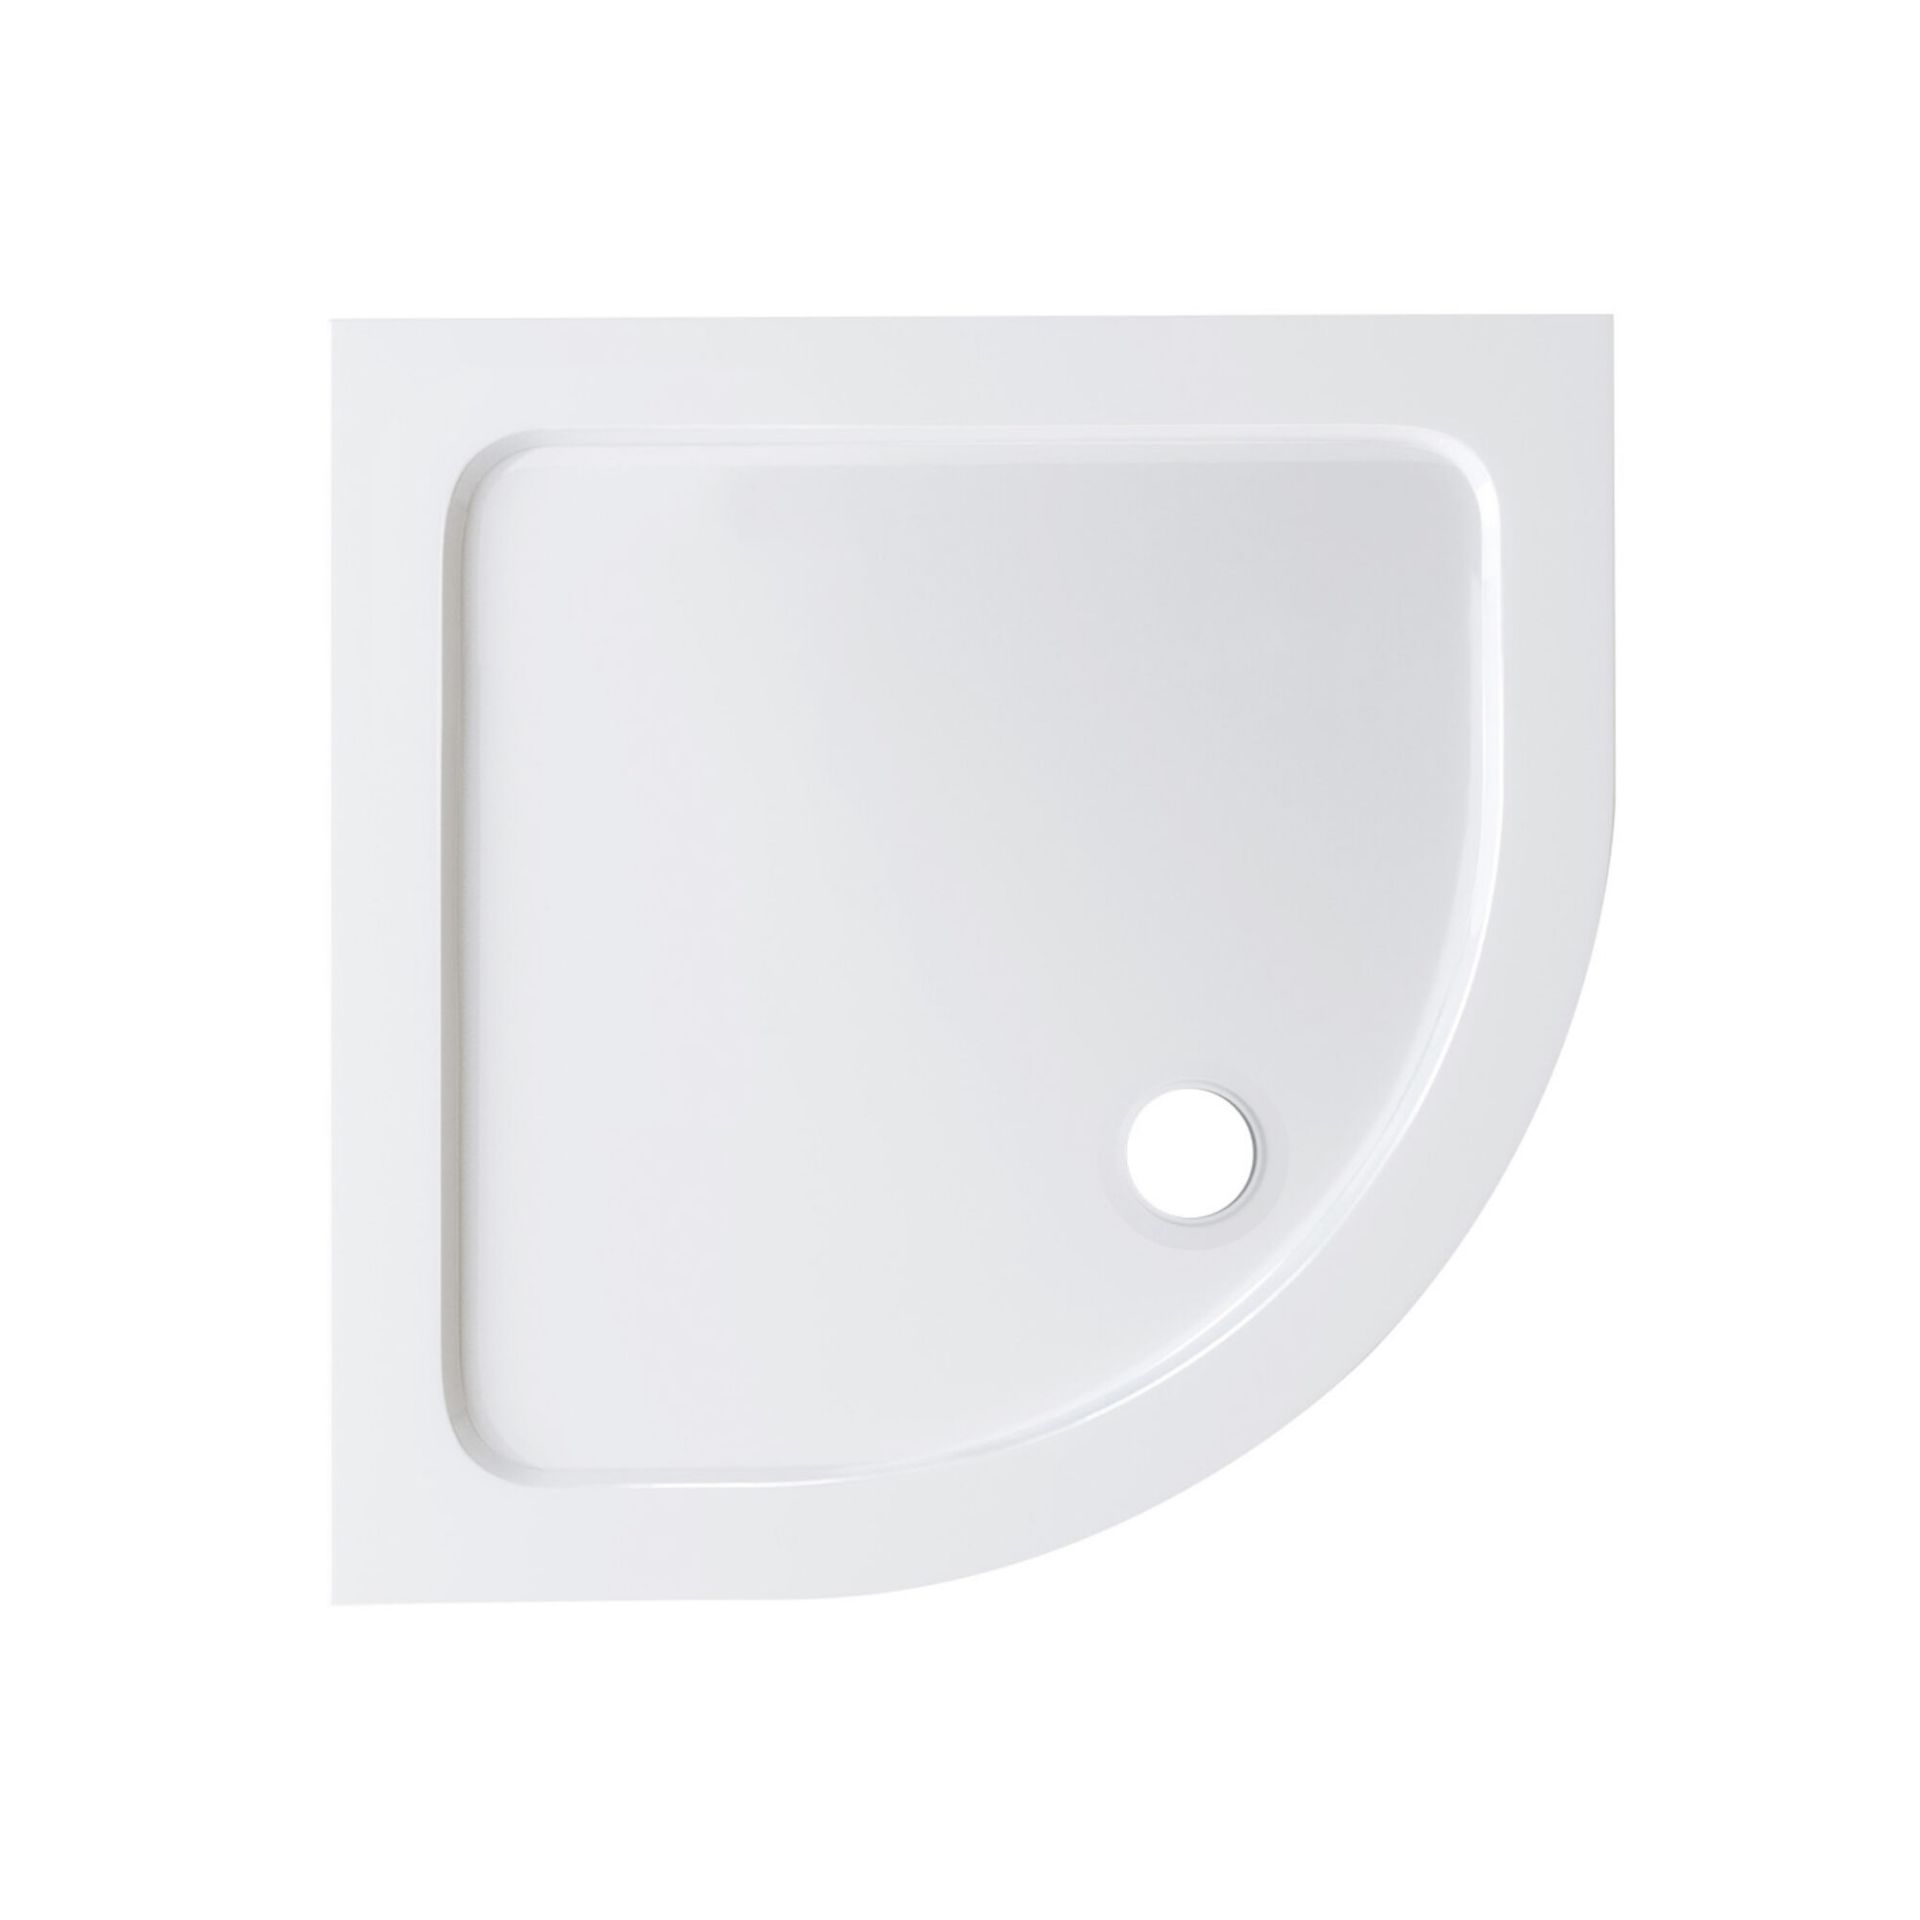 (CS51) 900x900mm Quadrant Ultra Slim Stone Shower Tray. RRP £224.99. Low profile ultra slim design